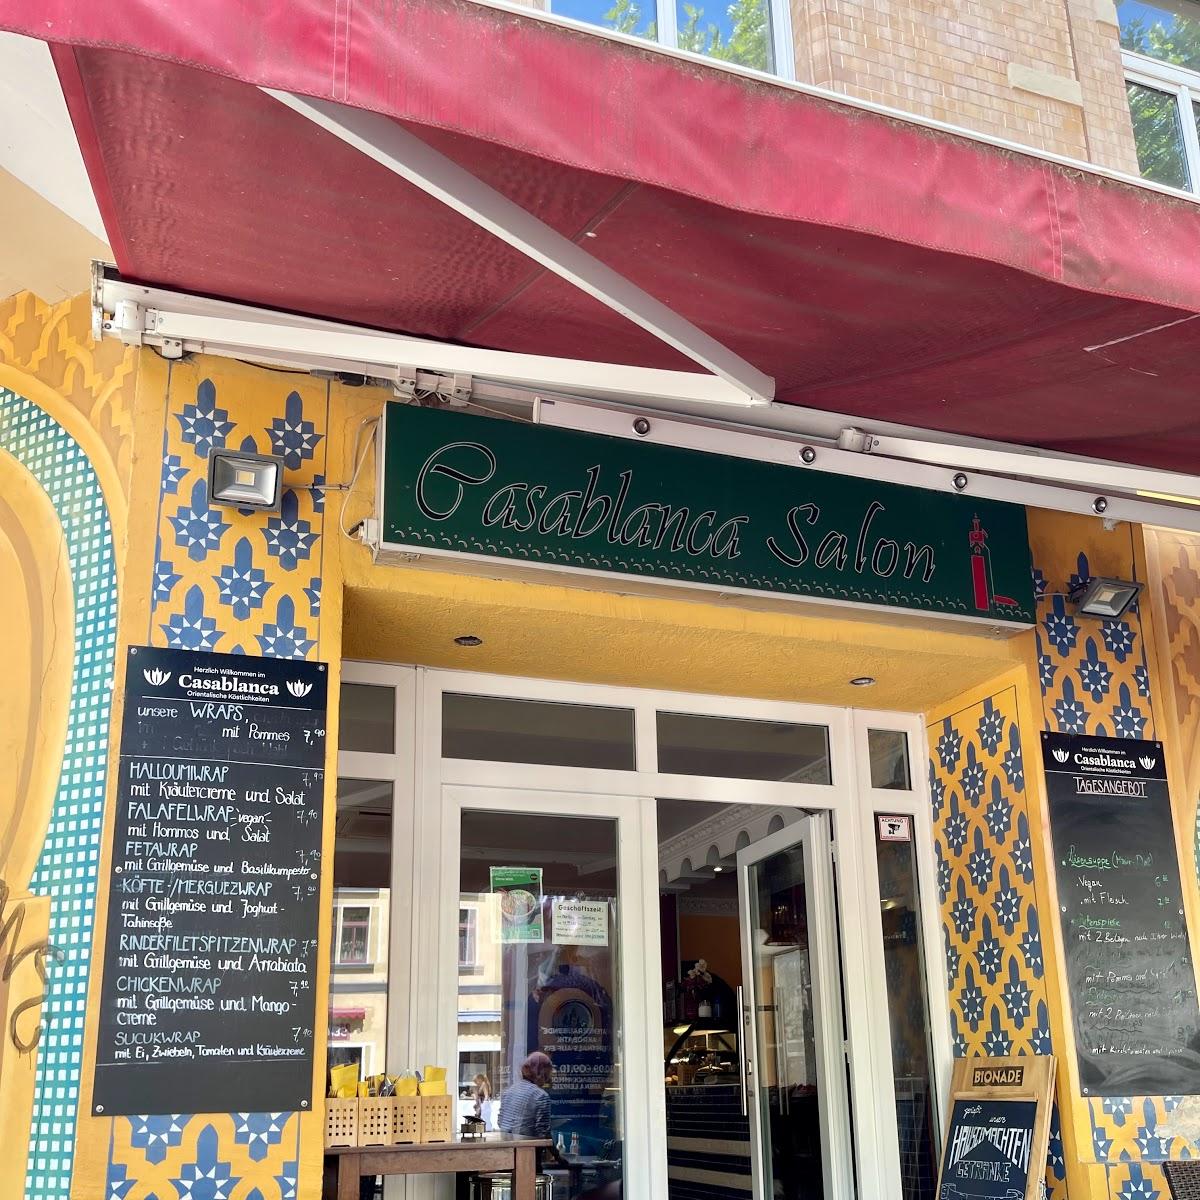 Restaurant "Salon Casablanca" in Leipzig